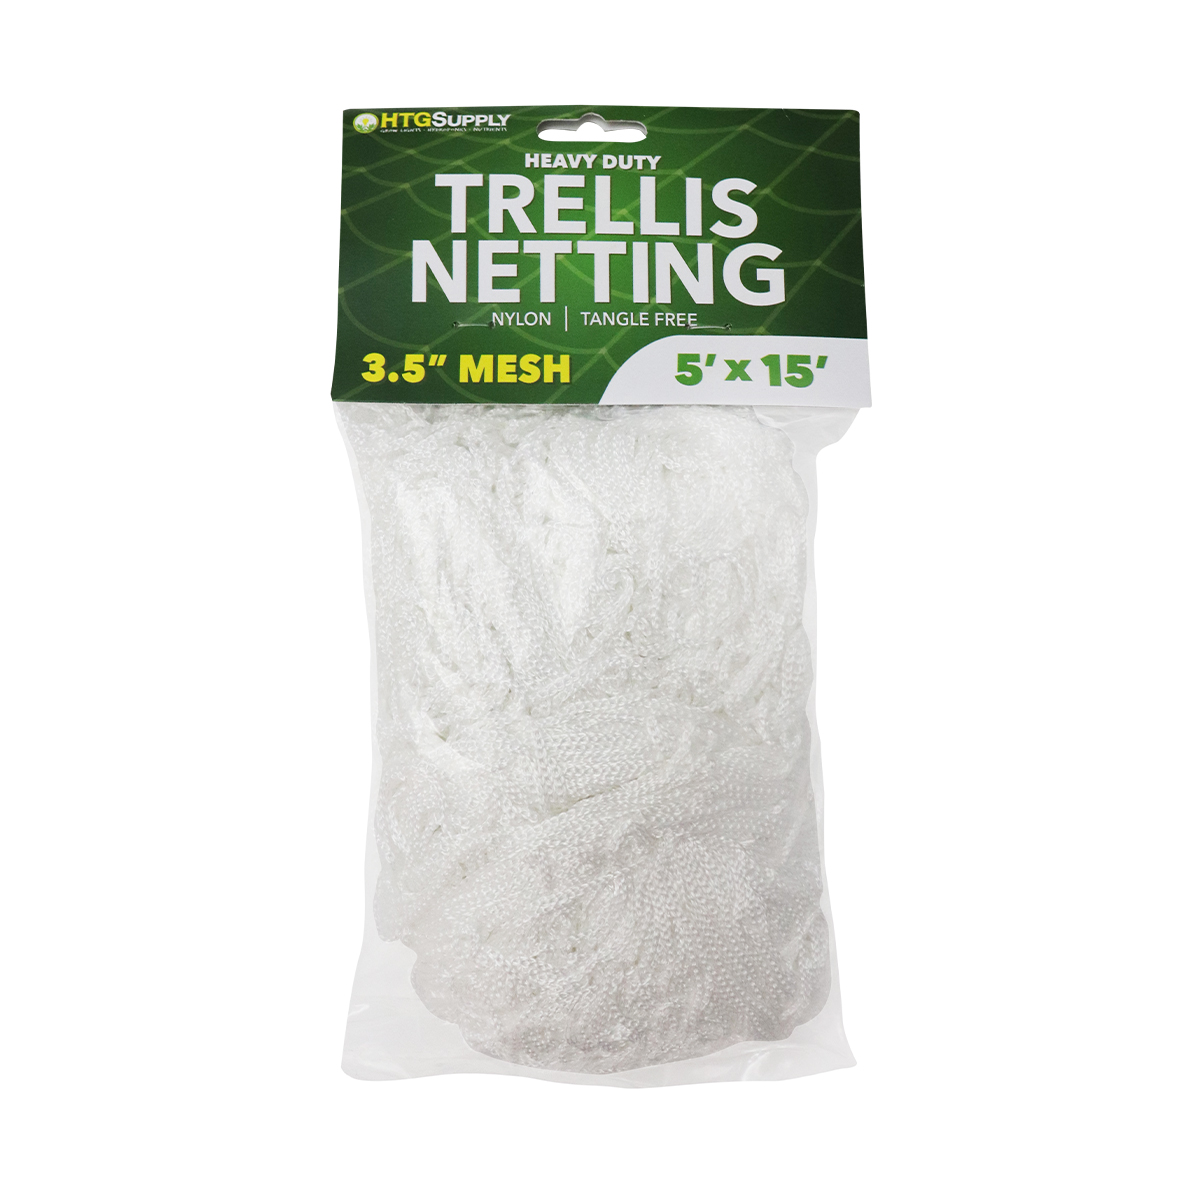 Trellis Netting Polyester Net 3.5" Mesh 5' x 15' Trellis Plant Support BAY HYDRO 